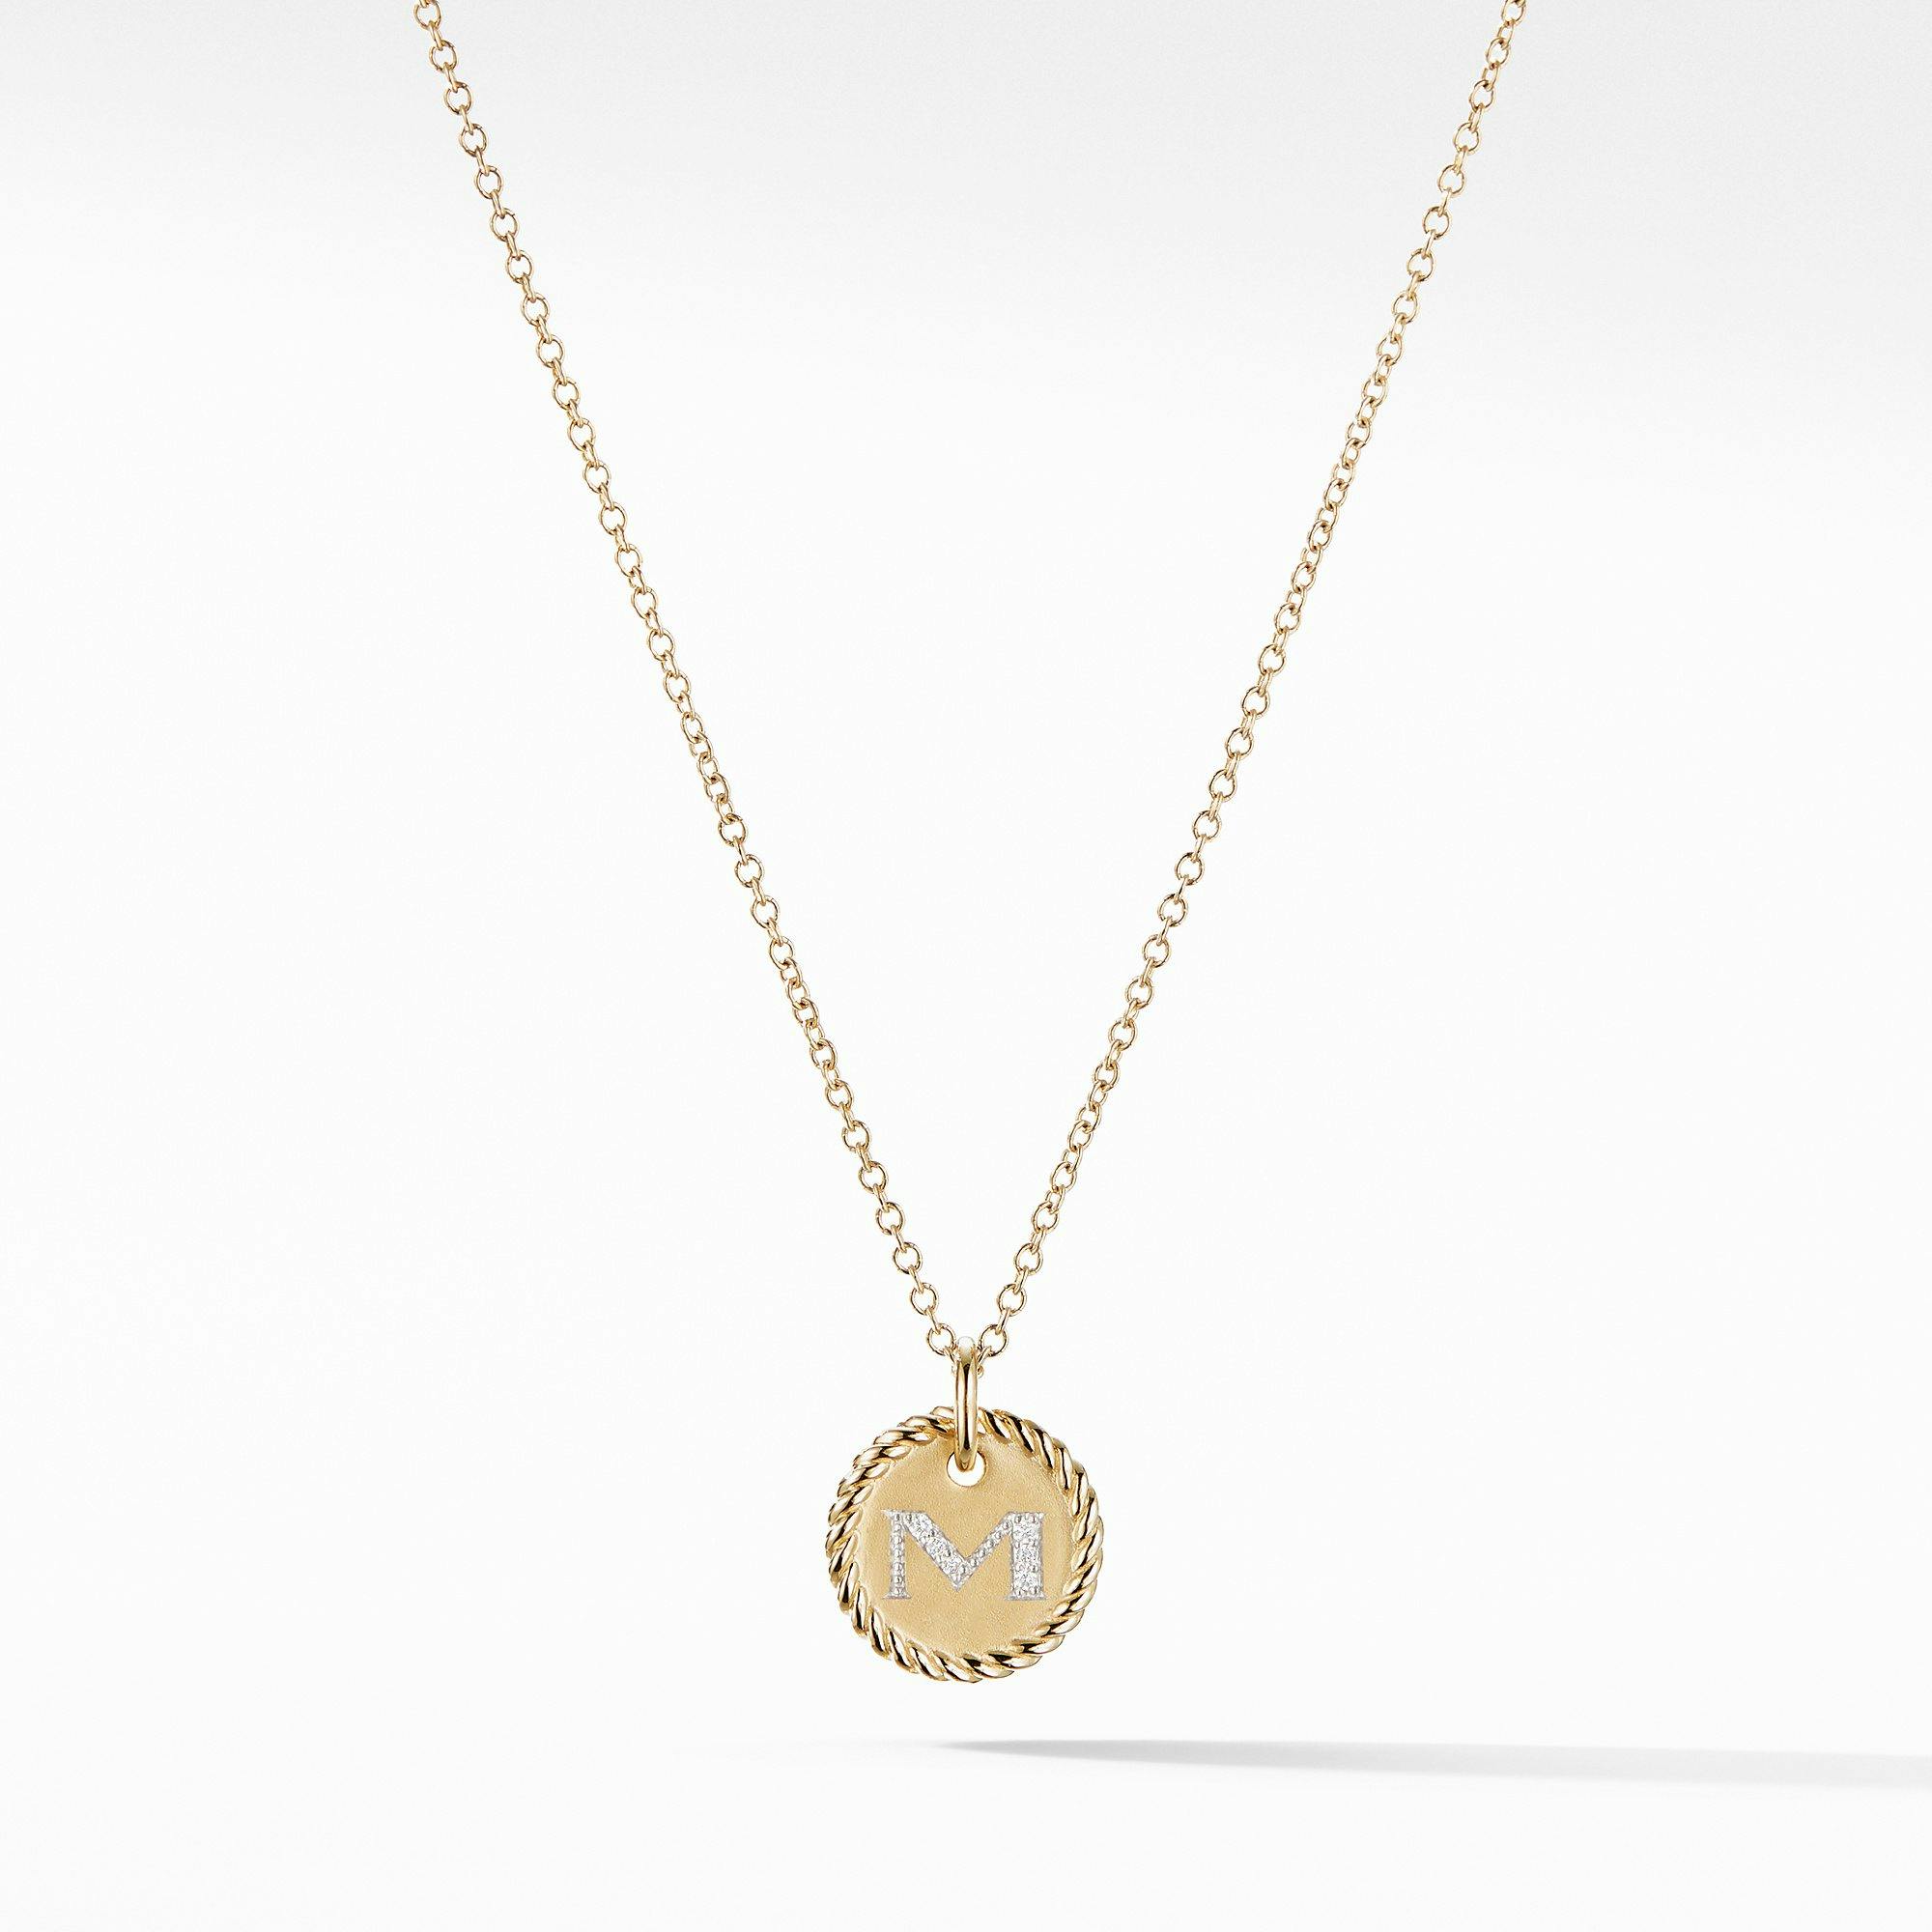 David Yurman "M" Initial Charm Necklace in 18k Yellow Gold with Diamonds